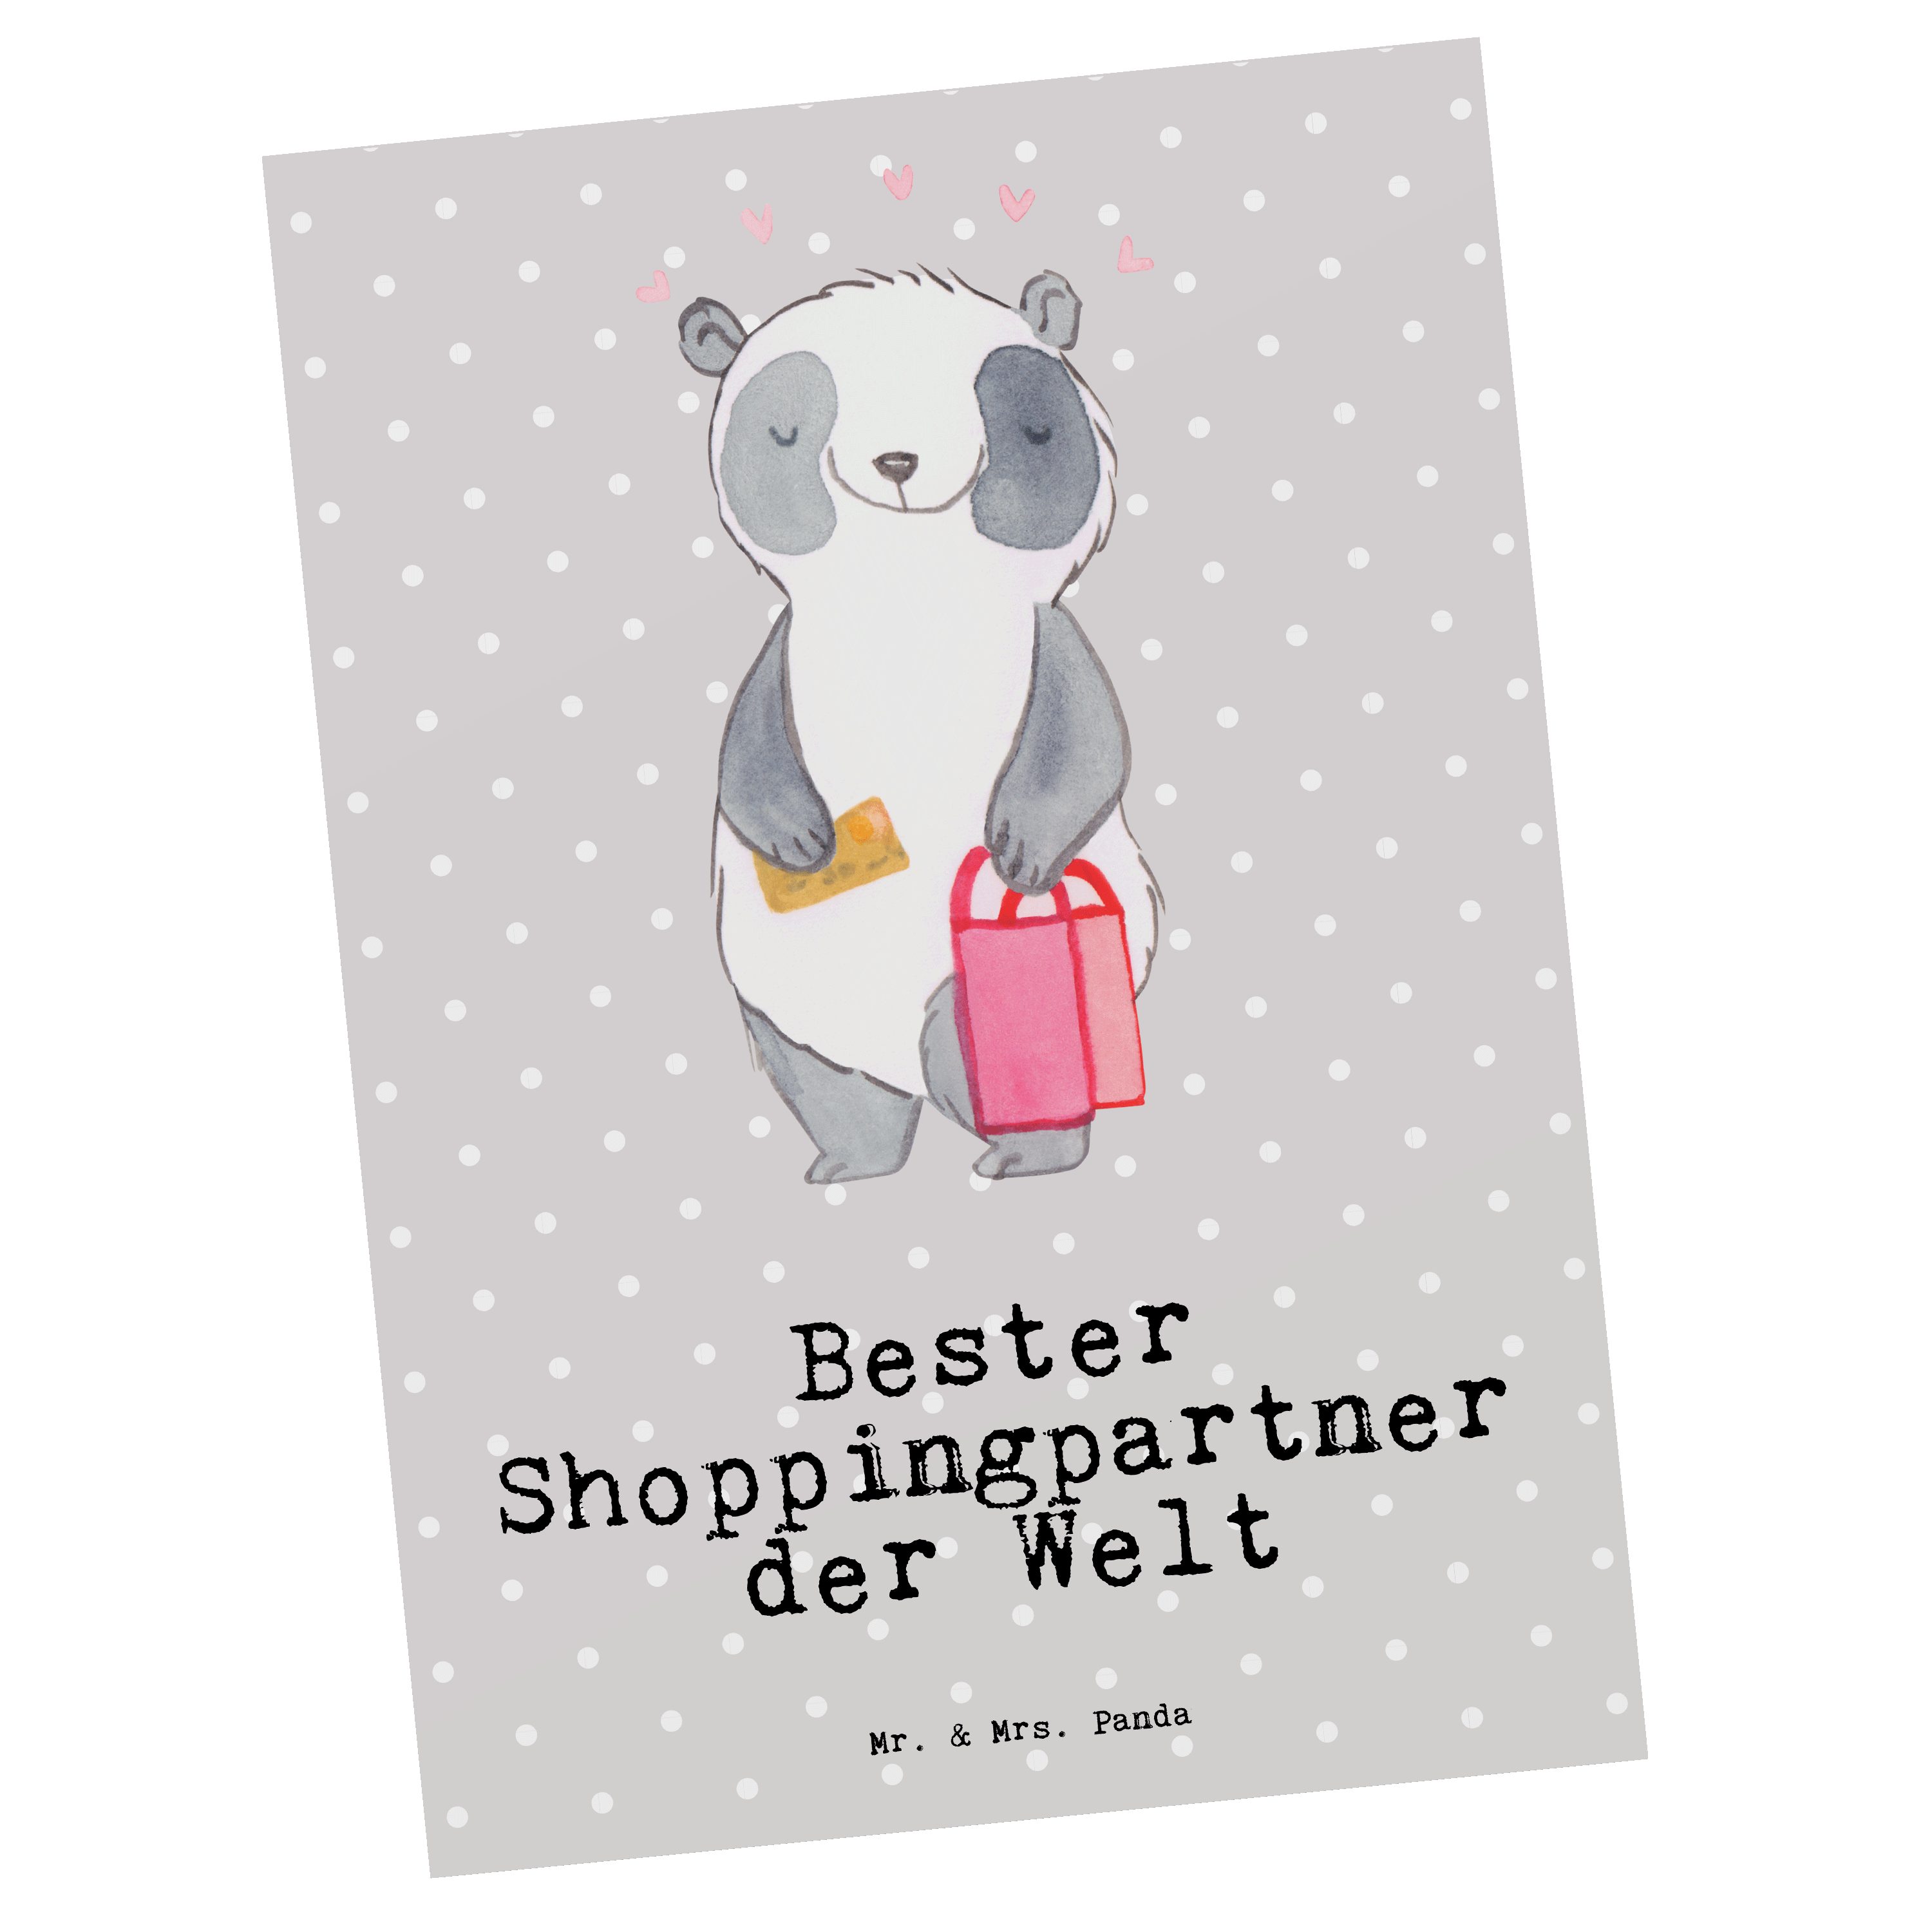 Mr. & Mrs. Panda Geschenk, Ansi - Shoppingpartner der Grau - Panda Bester Postkarte Welt Pastell